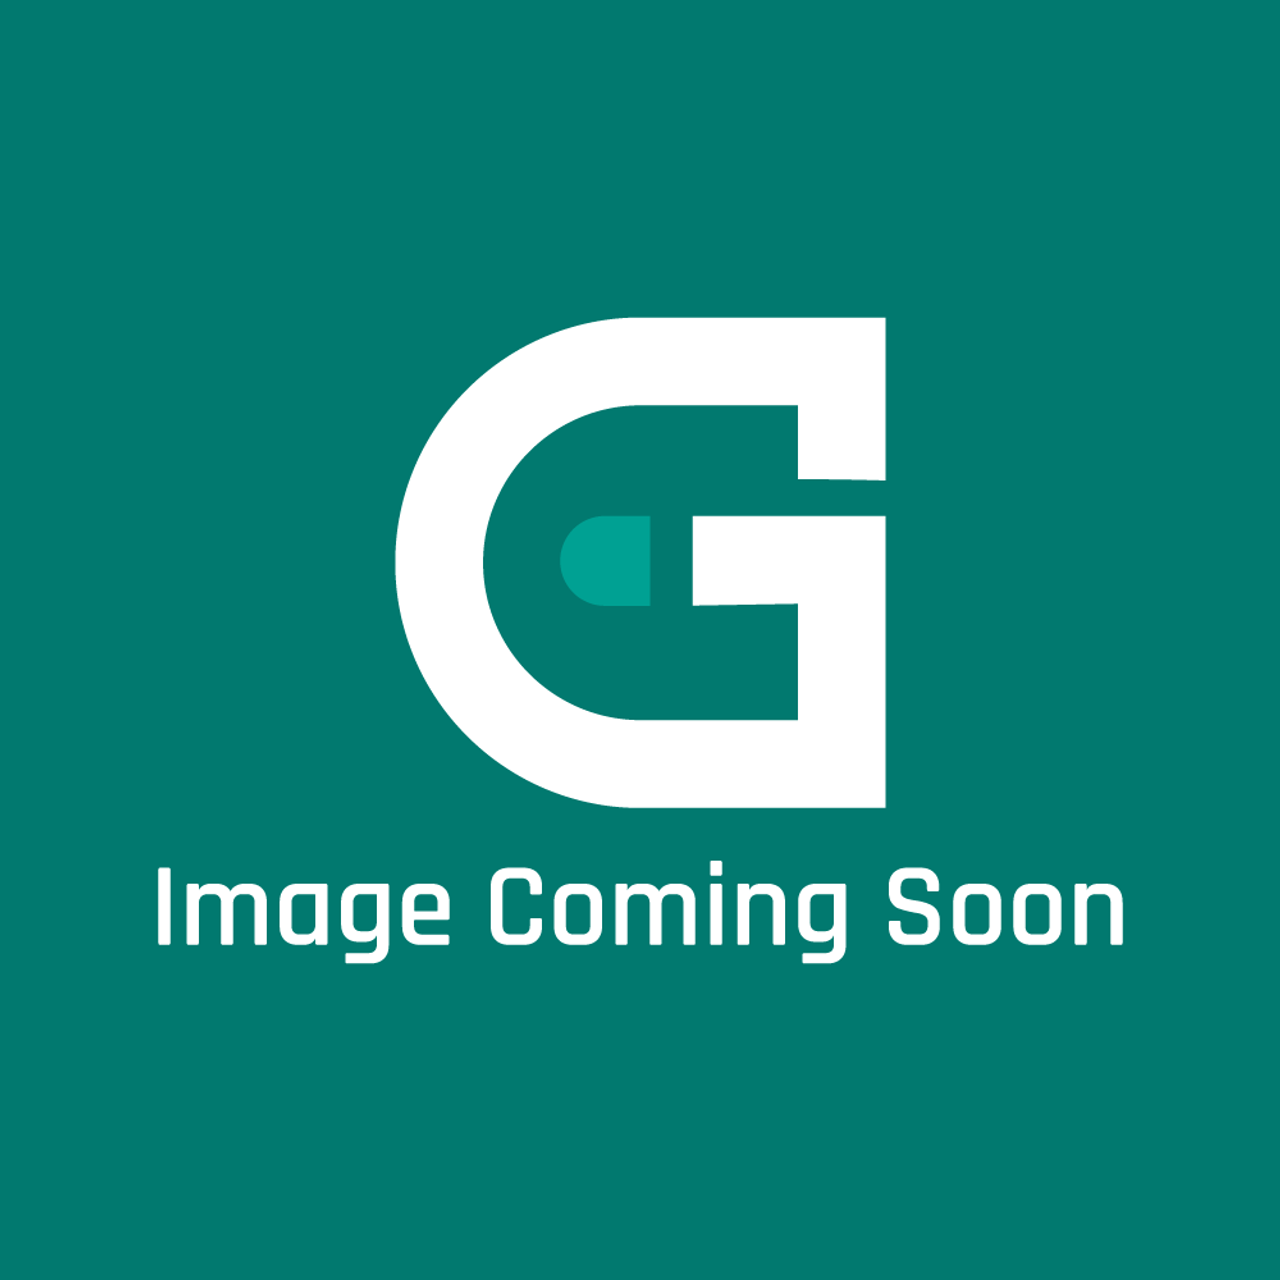 AGA SAG-1330058590 - Stopper Frame Gm (2 Pcs) - Image Coming Soon!